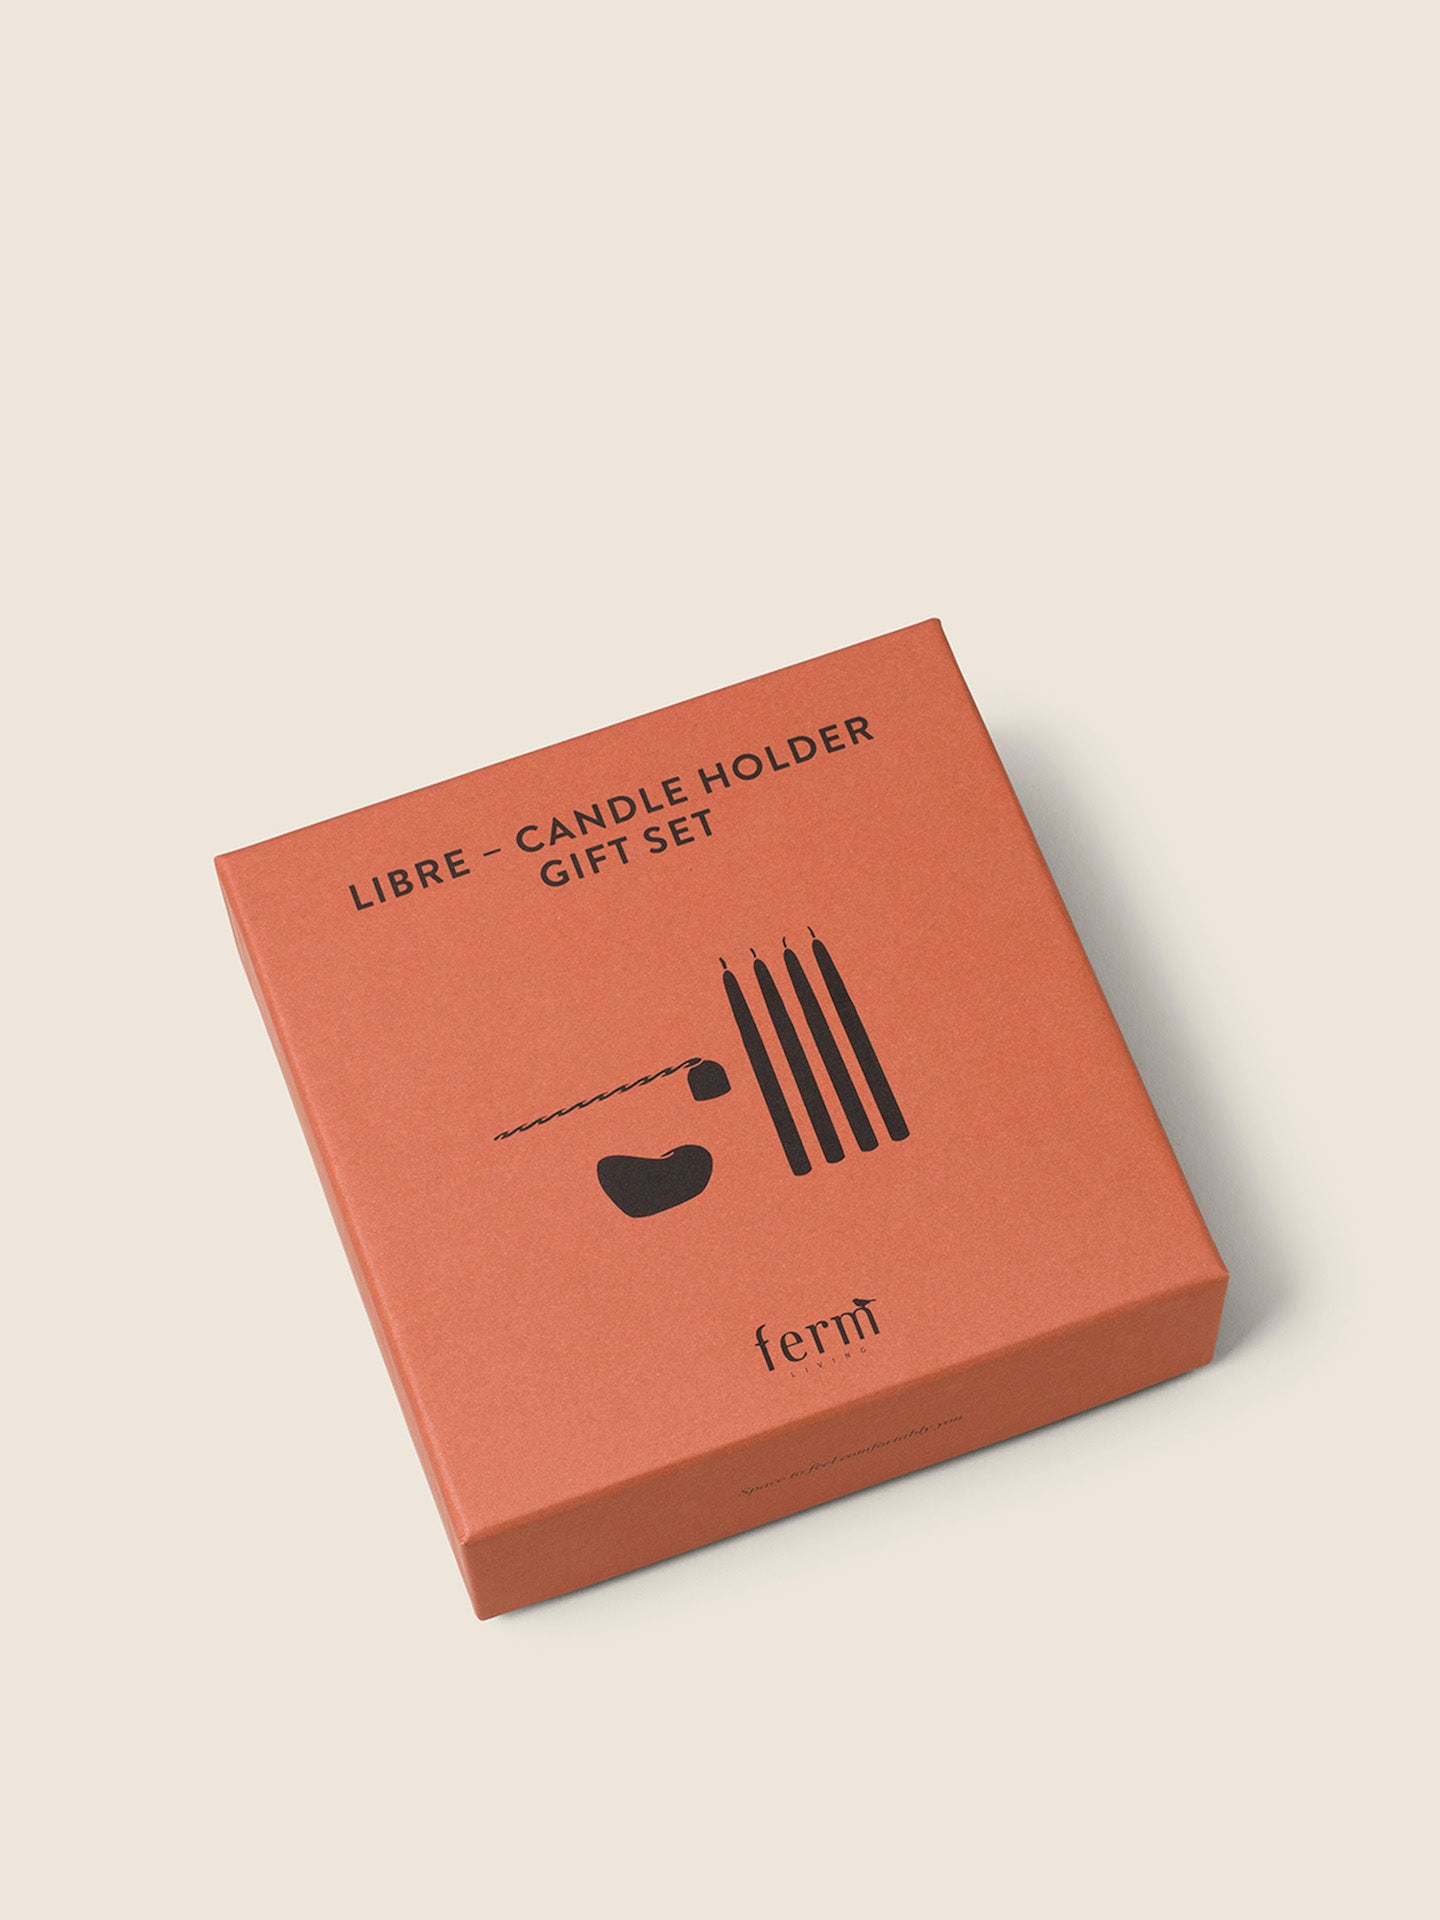 Libre - Candle Holder Gift Set | Ceramic & Brass | by ferm Living - Lifestory - ferm LIVING